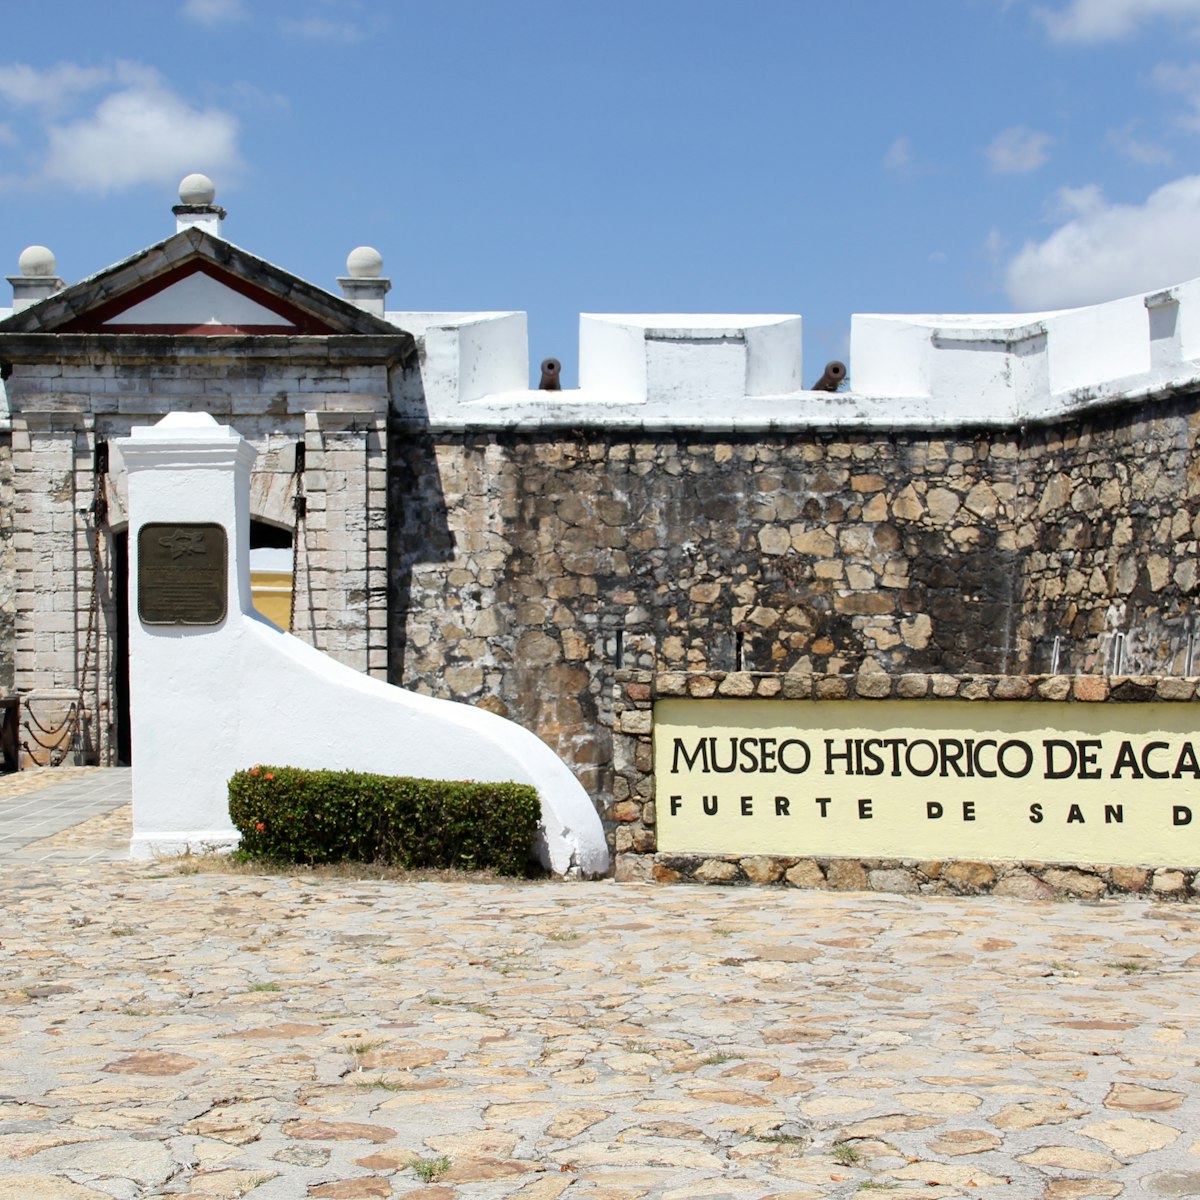 Museo Histórico de Acapulco at Fort San Diego.